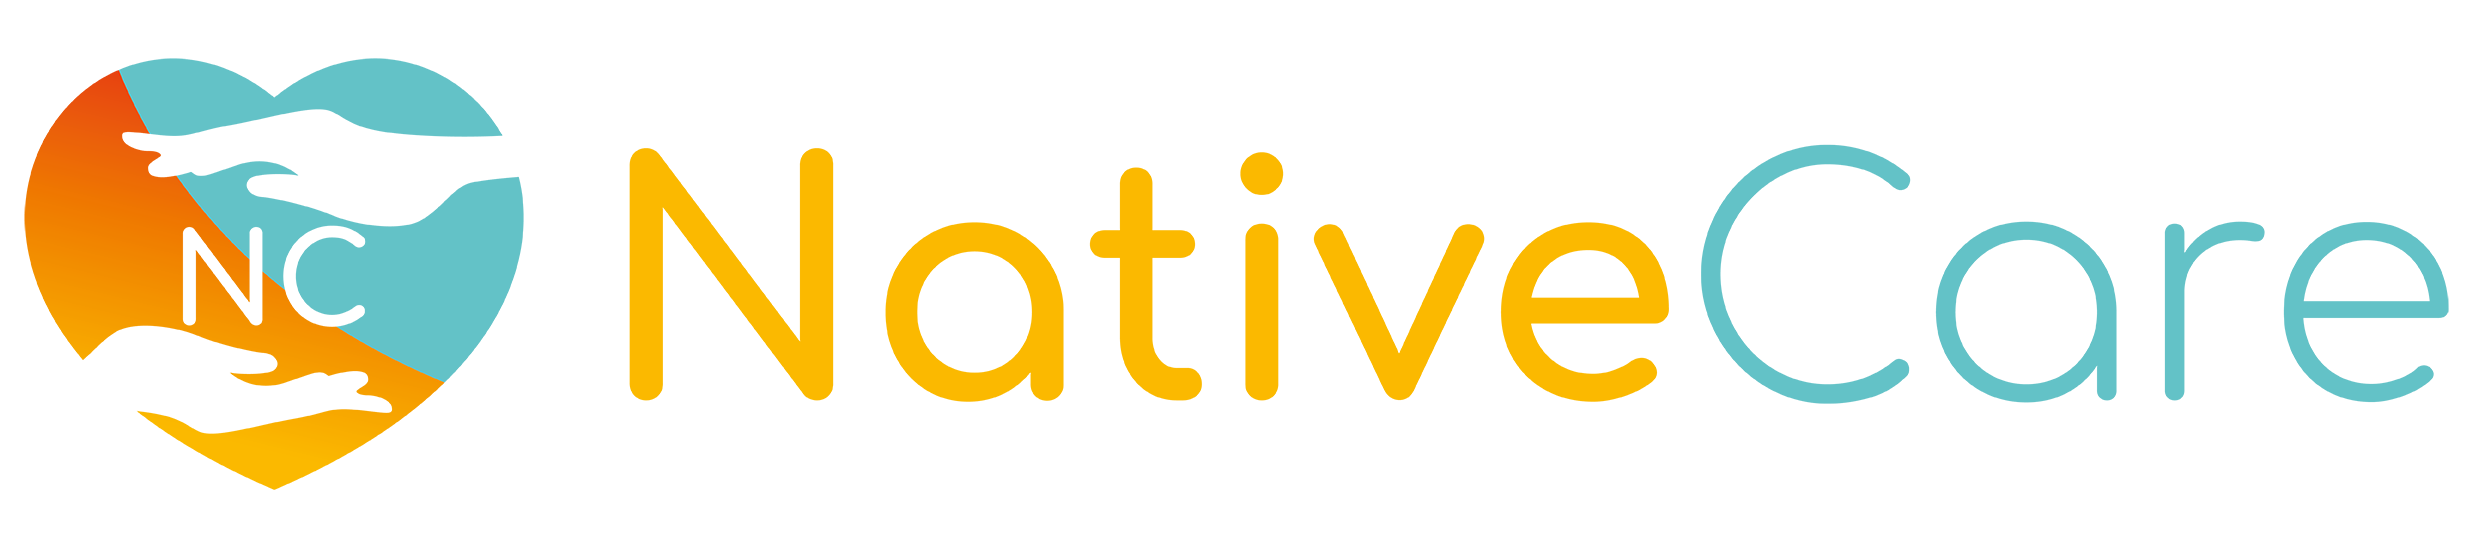 Native-Care-logo